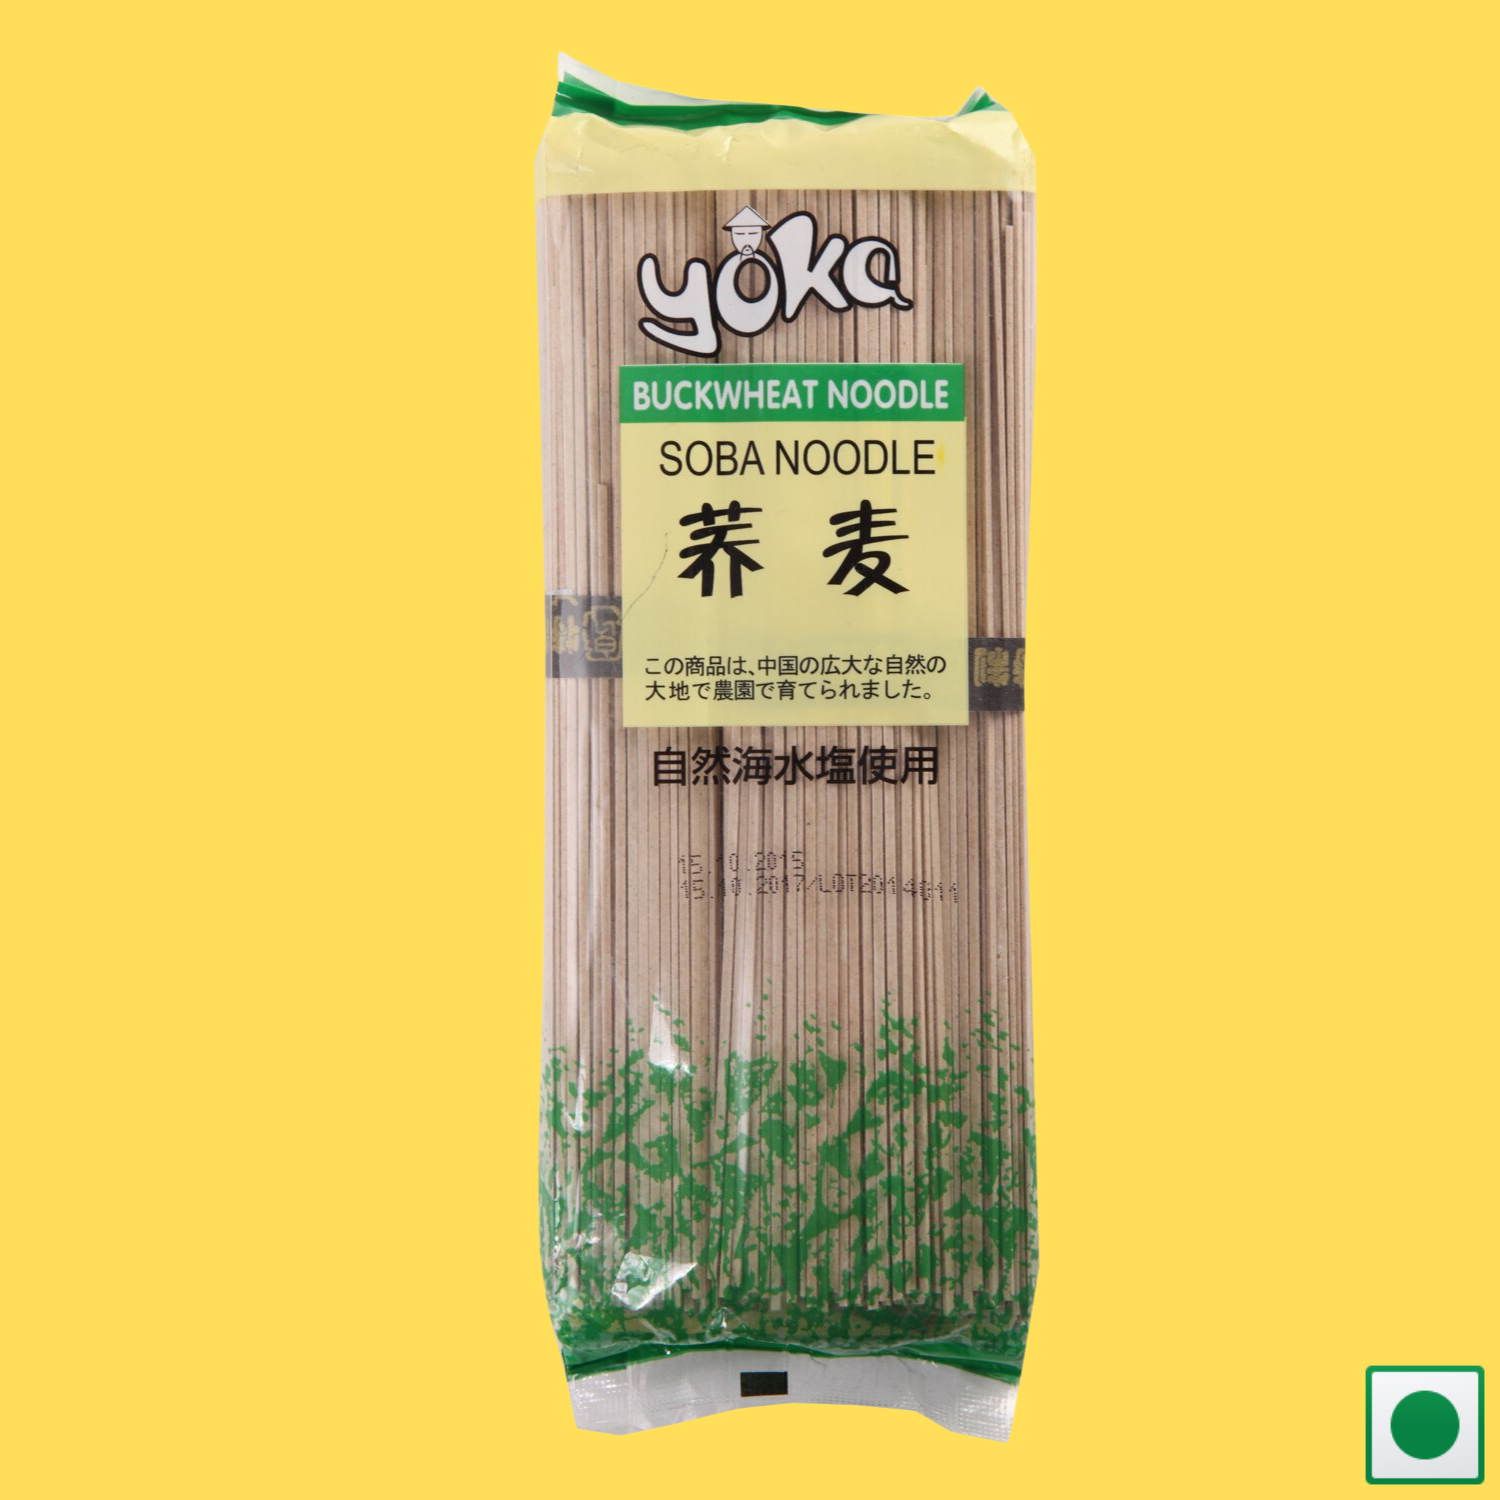 Yoka Soba Noodles Buckwheat, 300g (Imported)